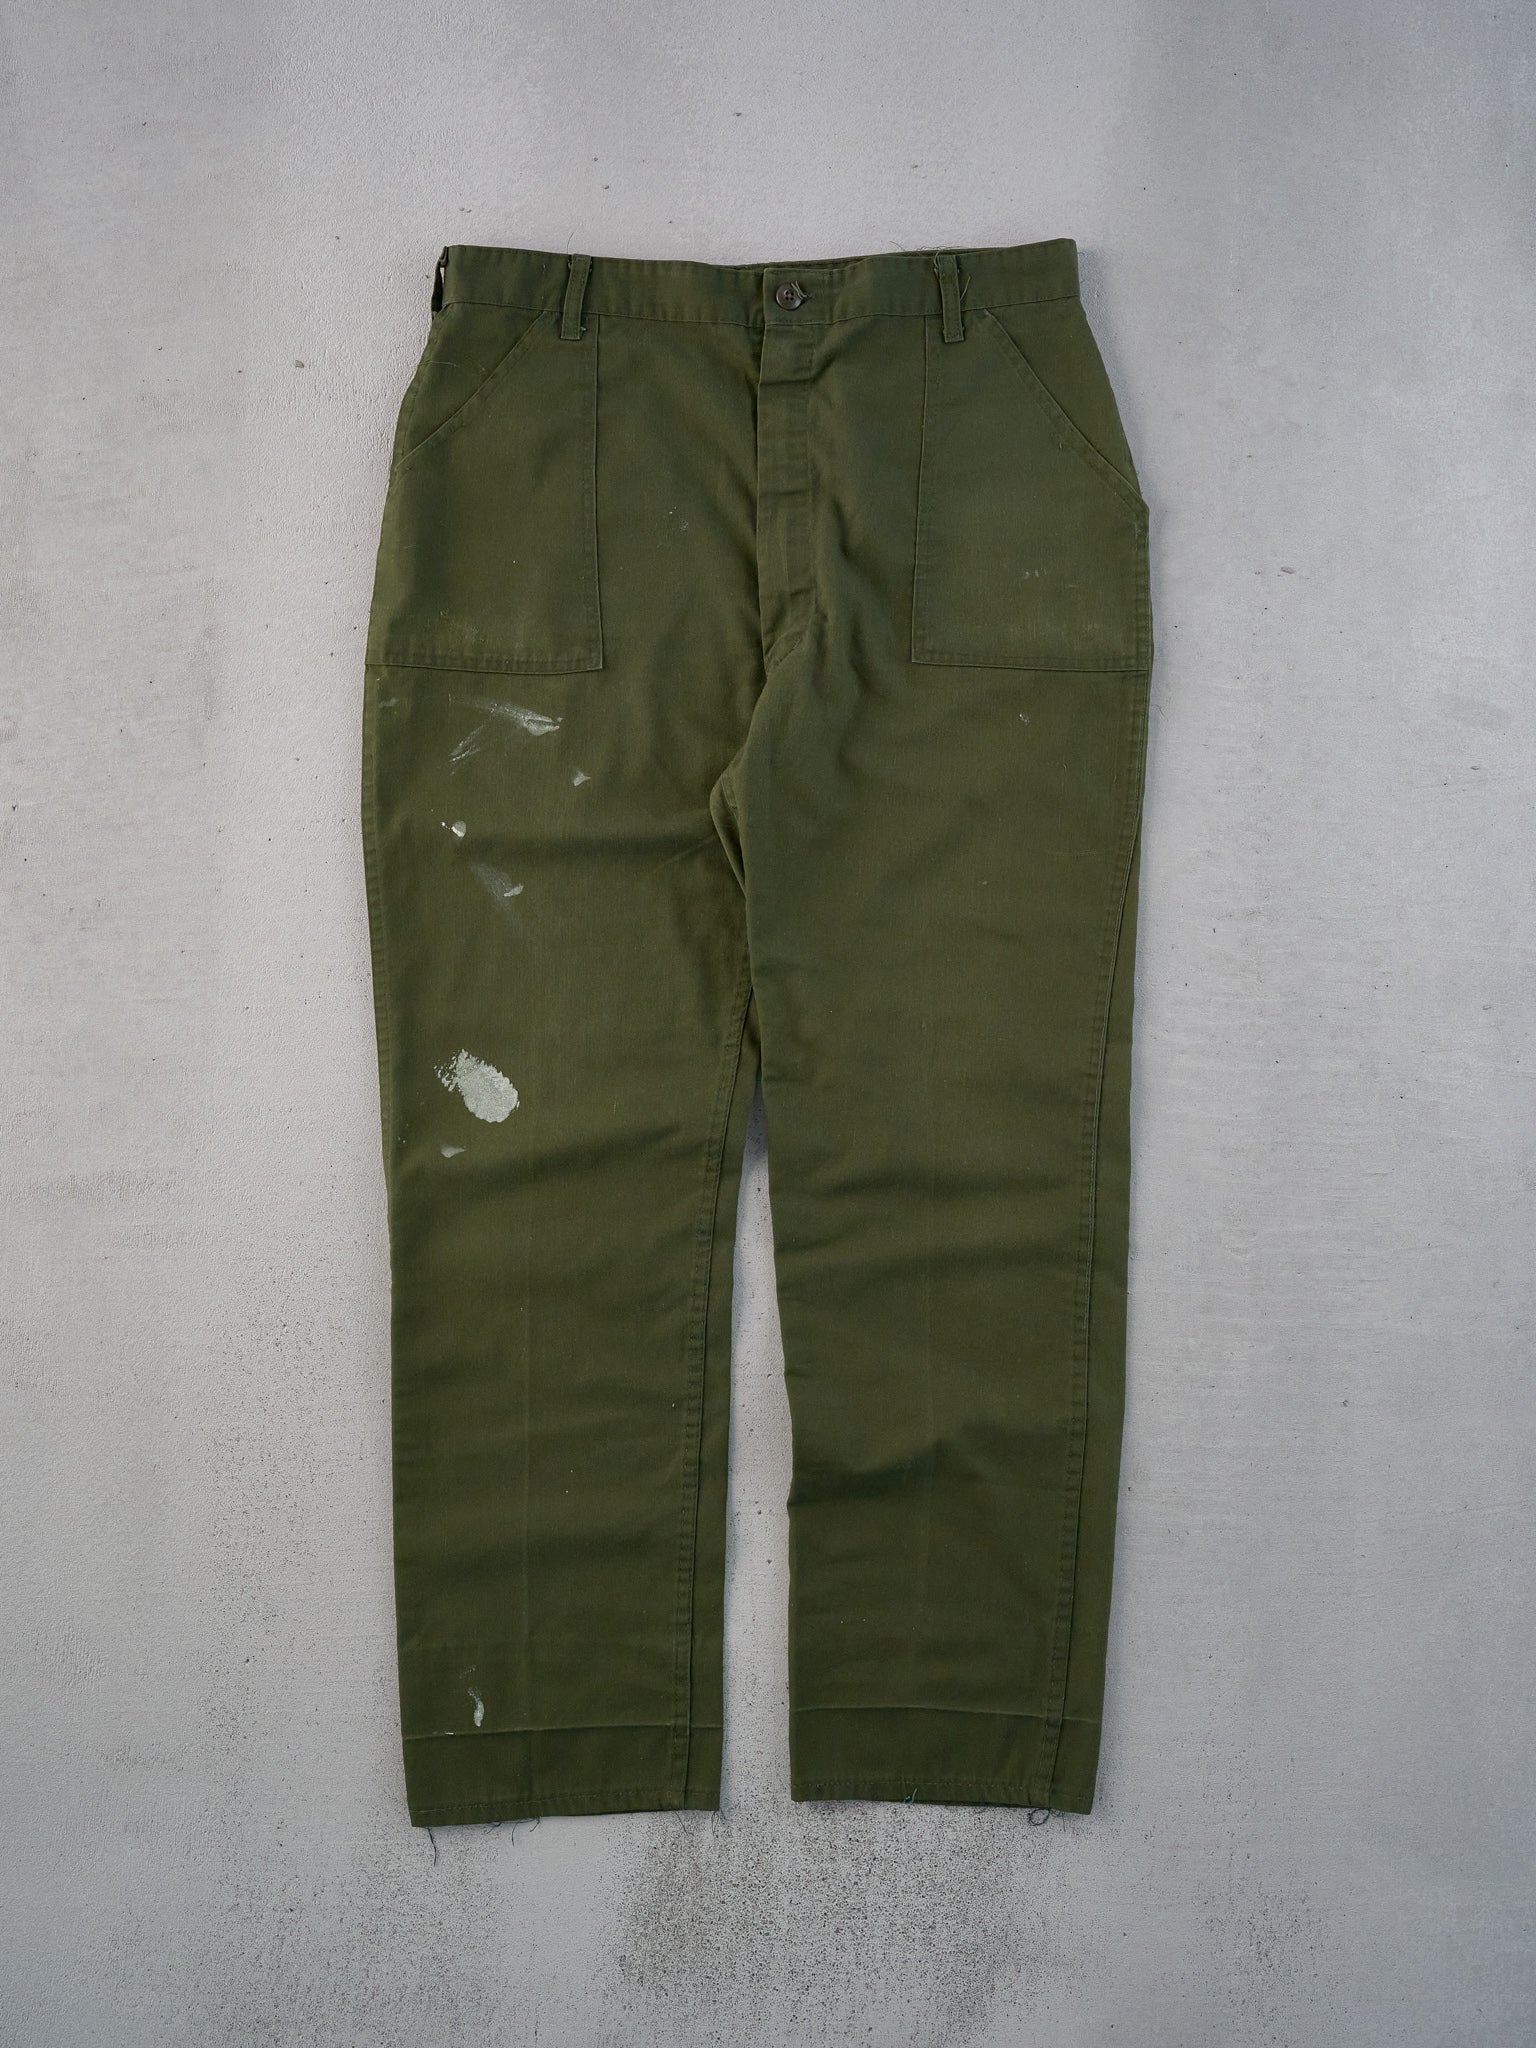 Vintage Green Army OG 107 Pants (35x32)